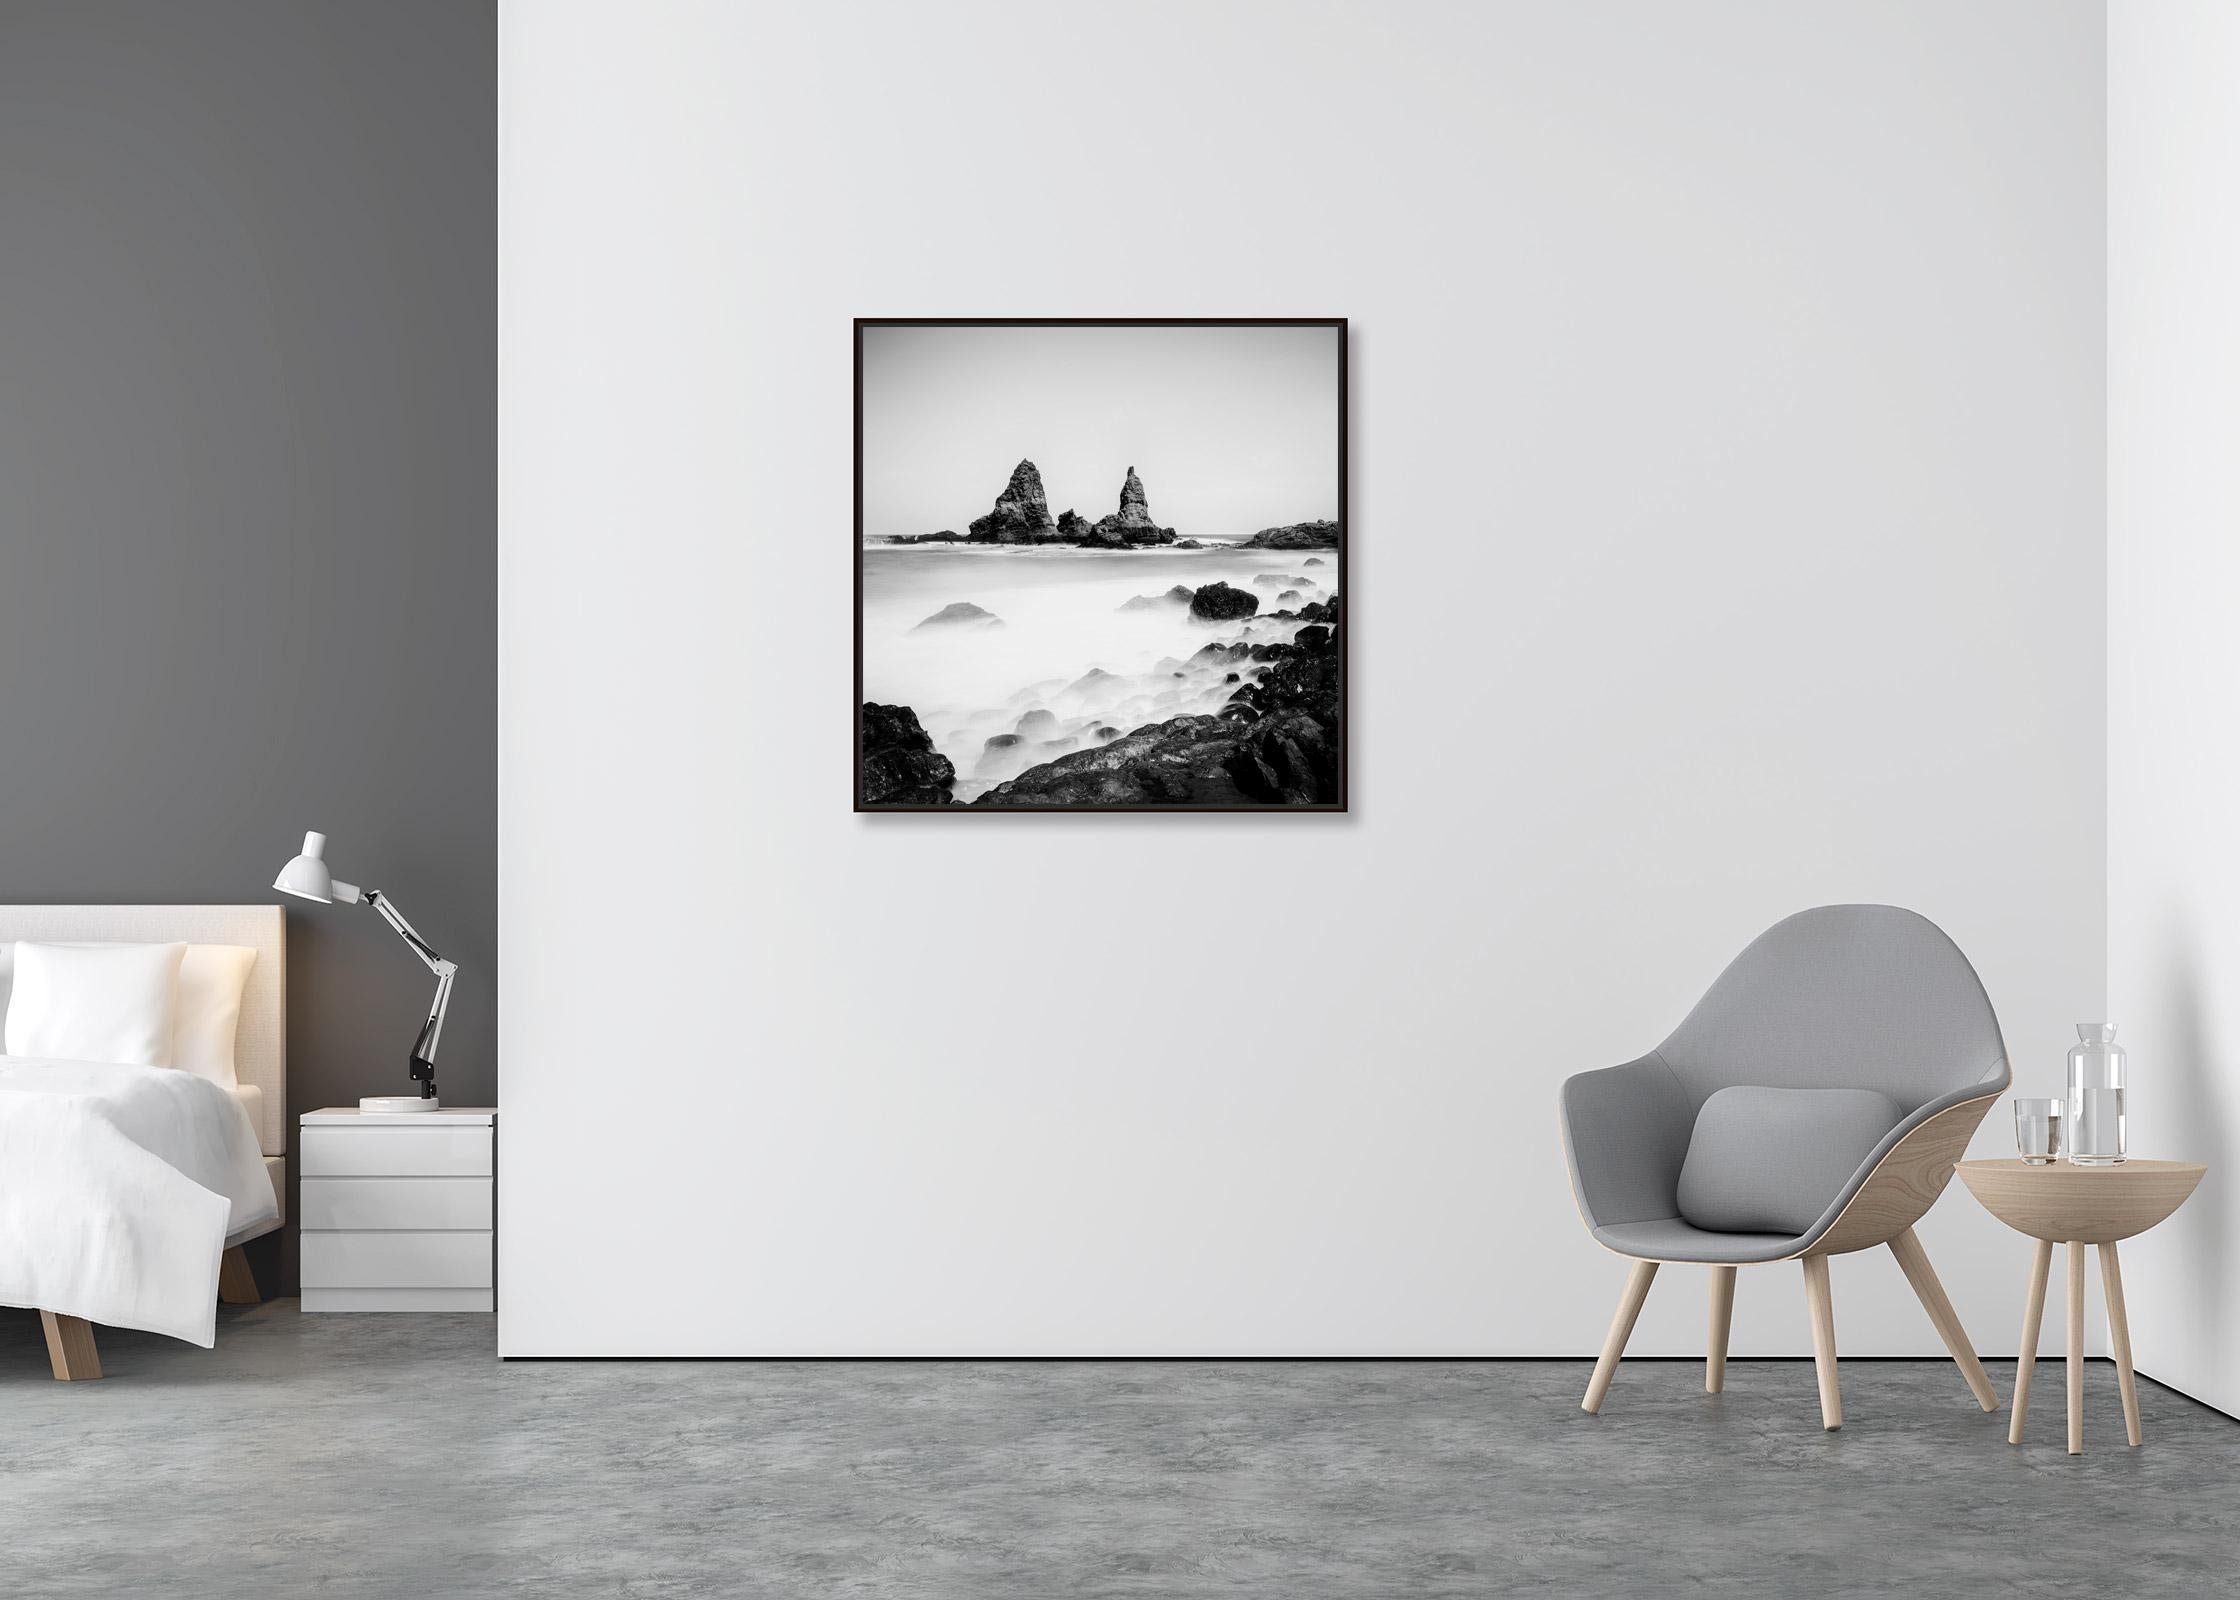 Roques de Arguamul Rocks, Spain, black and white, long exposure landscape photo - Contemporary Photograph by Gerald Berghammer